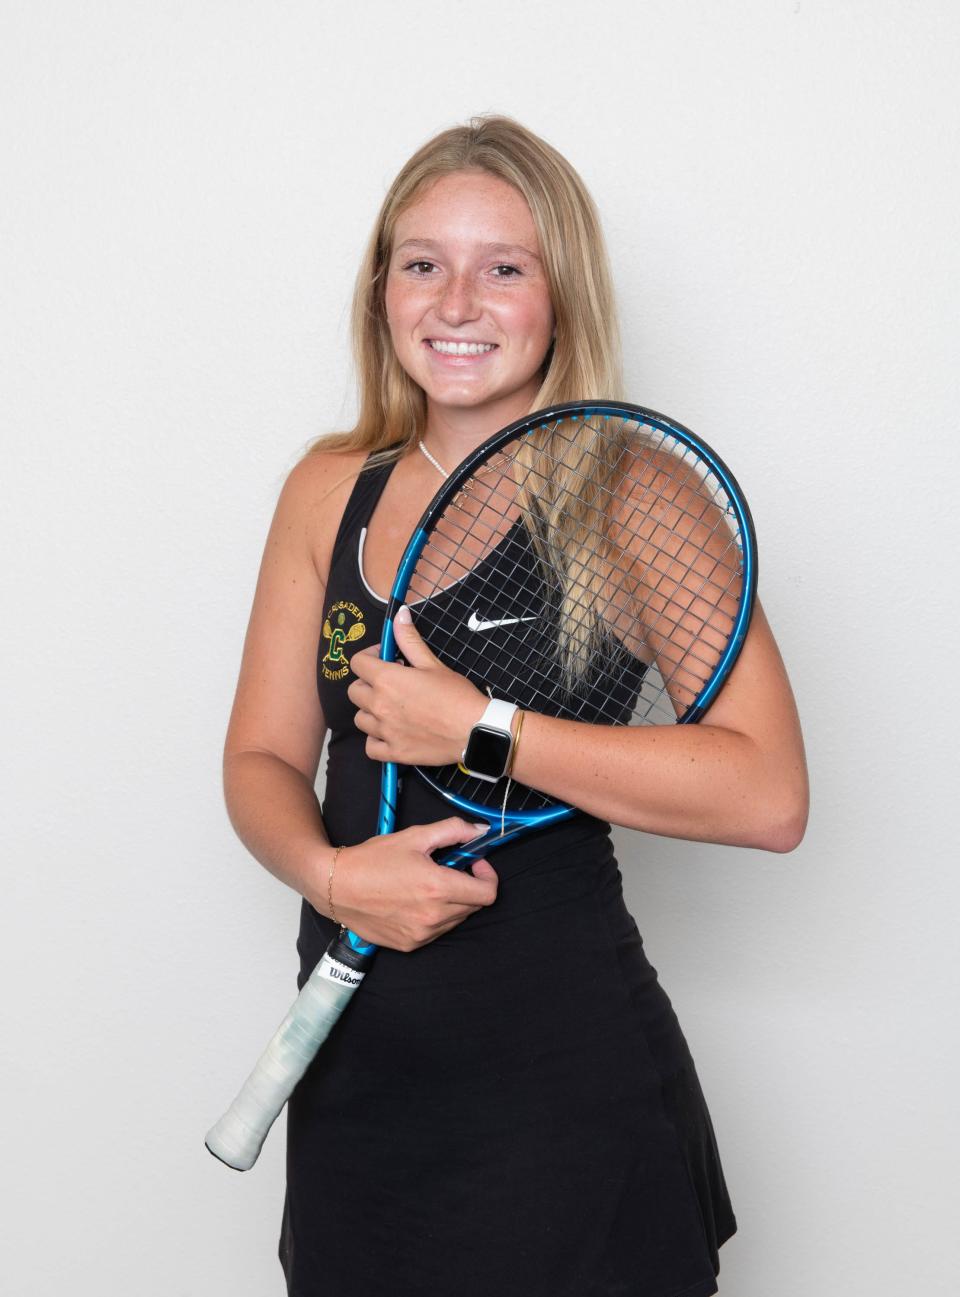 Girls Tennis Player of the Year - Gabby Goyins